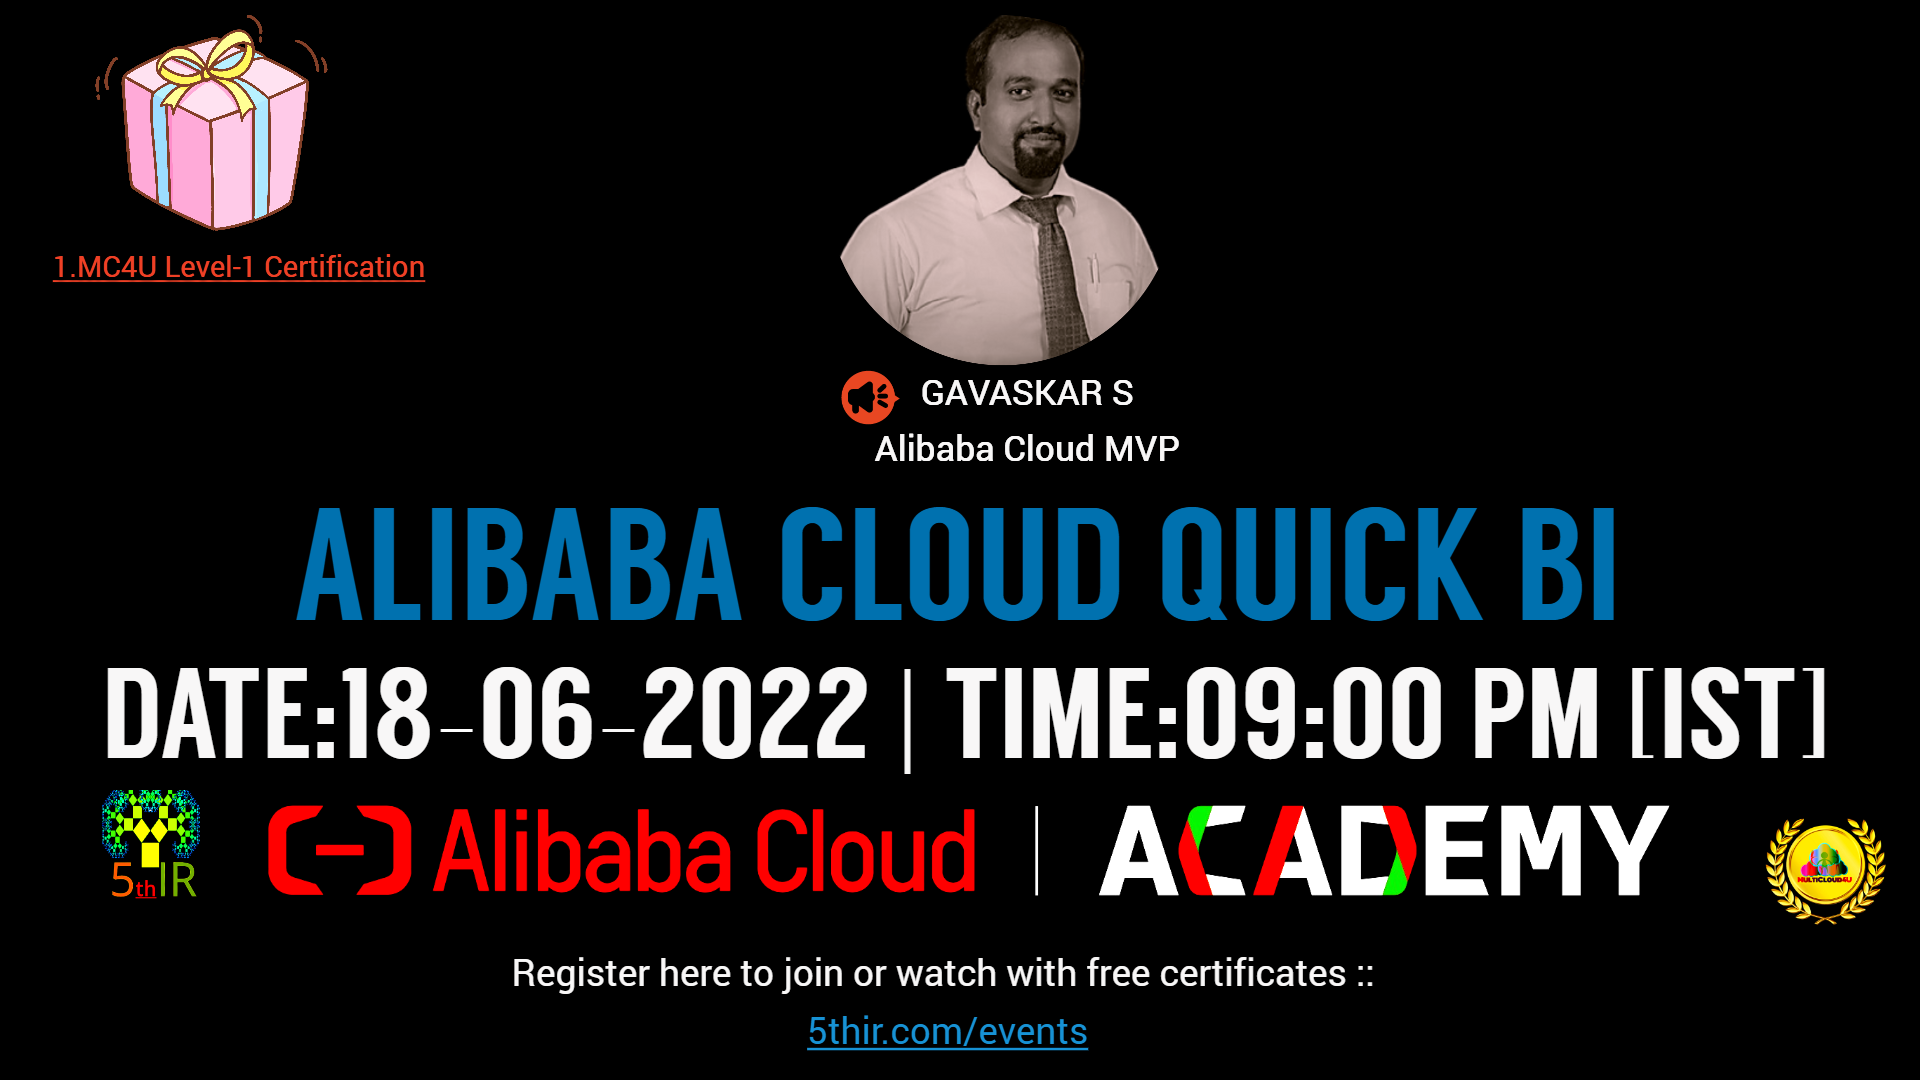 Alibaba Cloud QuickBI